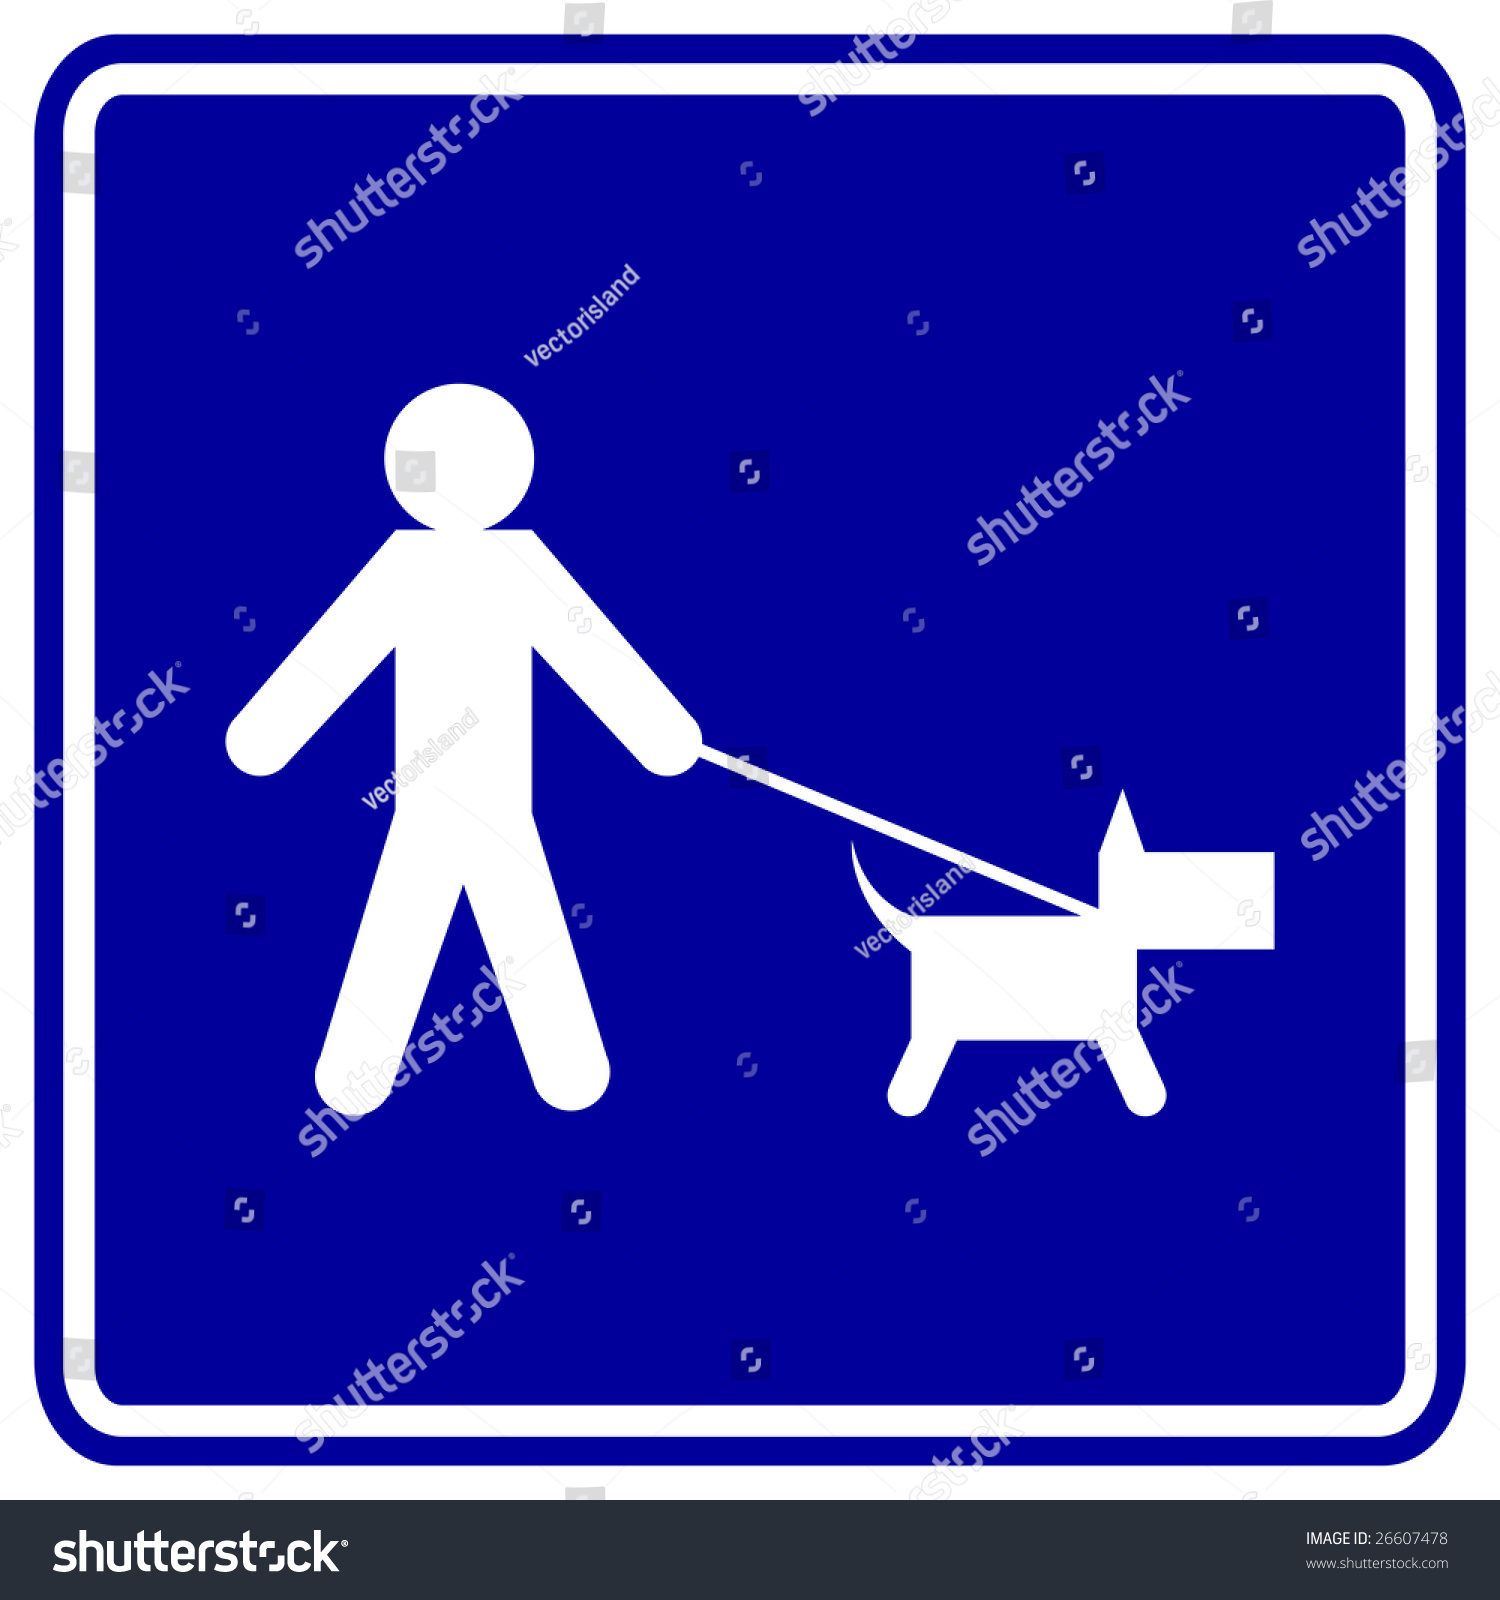 dog-walking-sign-stock-illustration-26607478-shutterstock